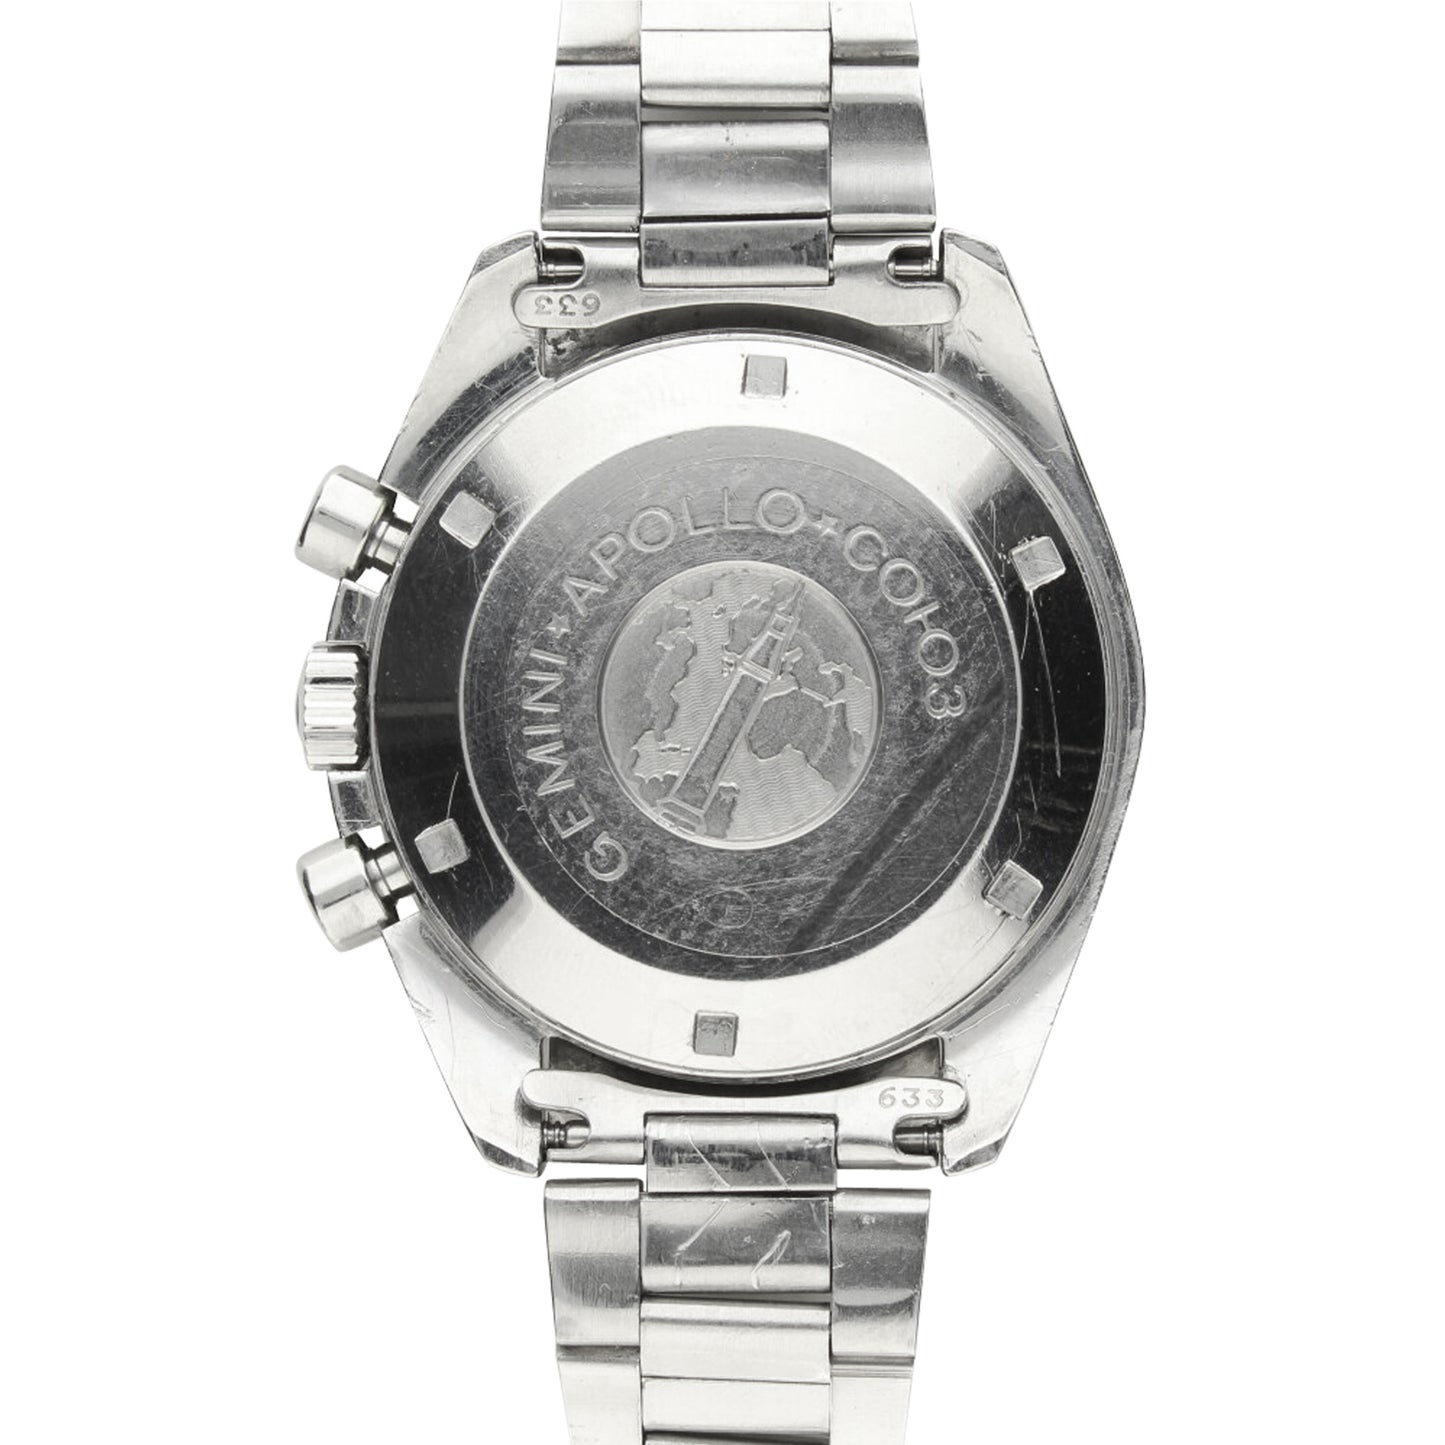 Stainless steel Speedmaster 'Apollo Soyuz' limited edition chronograph wristwatch. Made 1976